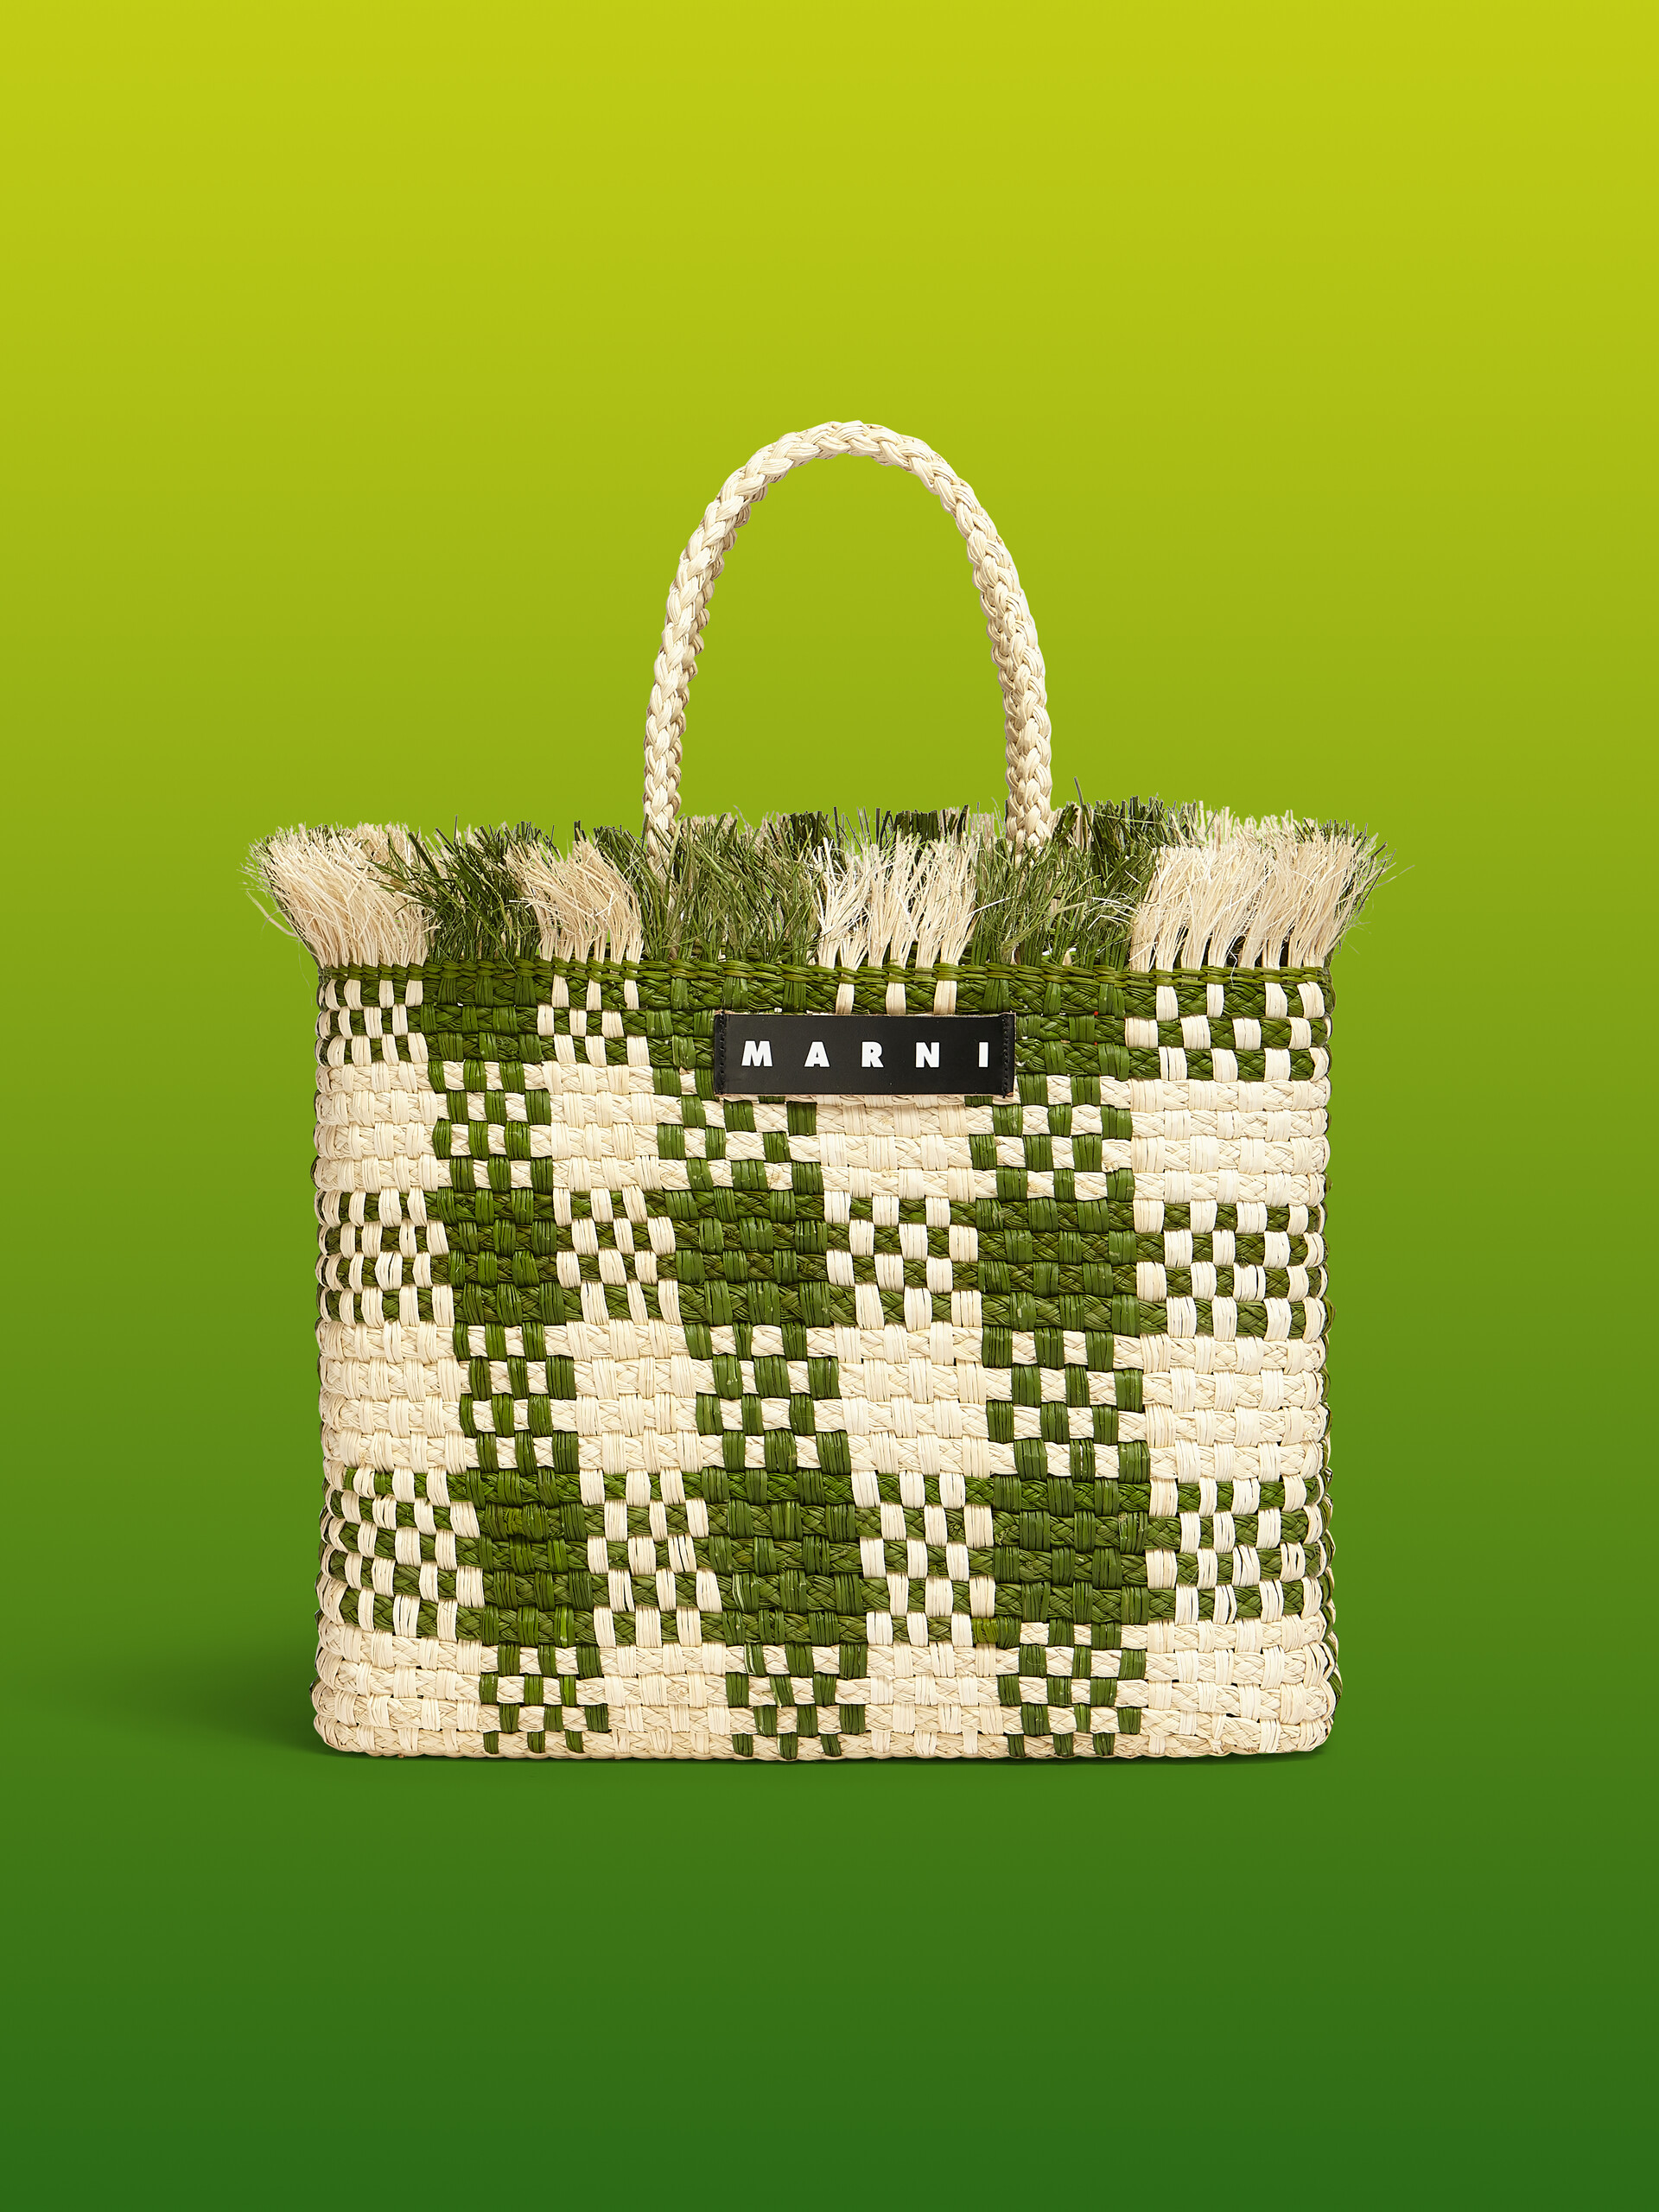 MARNI MARKET Knit Cotton Handbag Crochet Bag Striped Green Flower